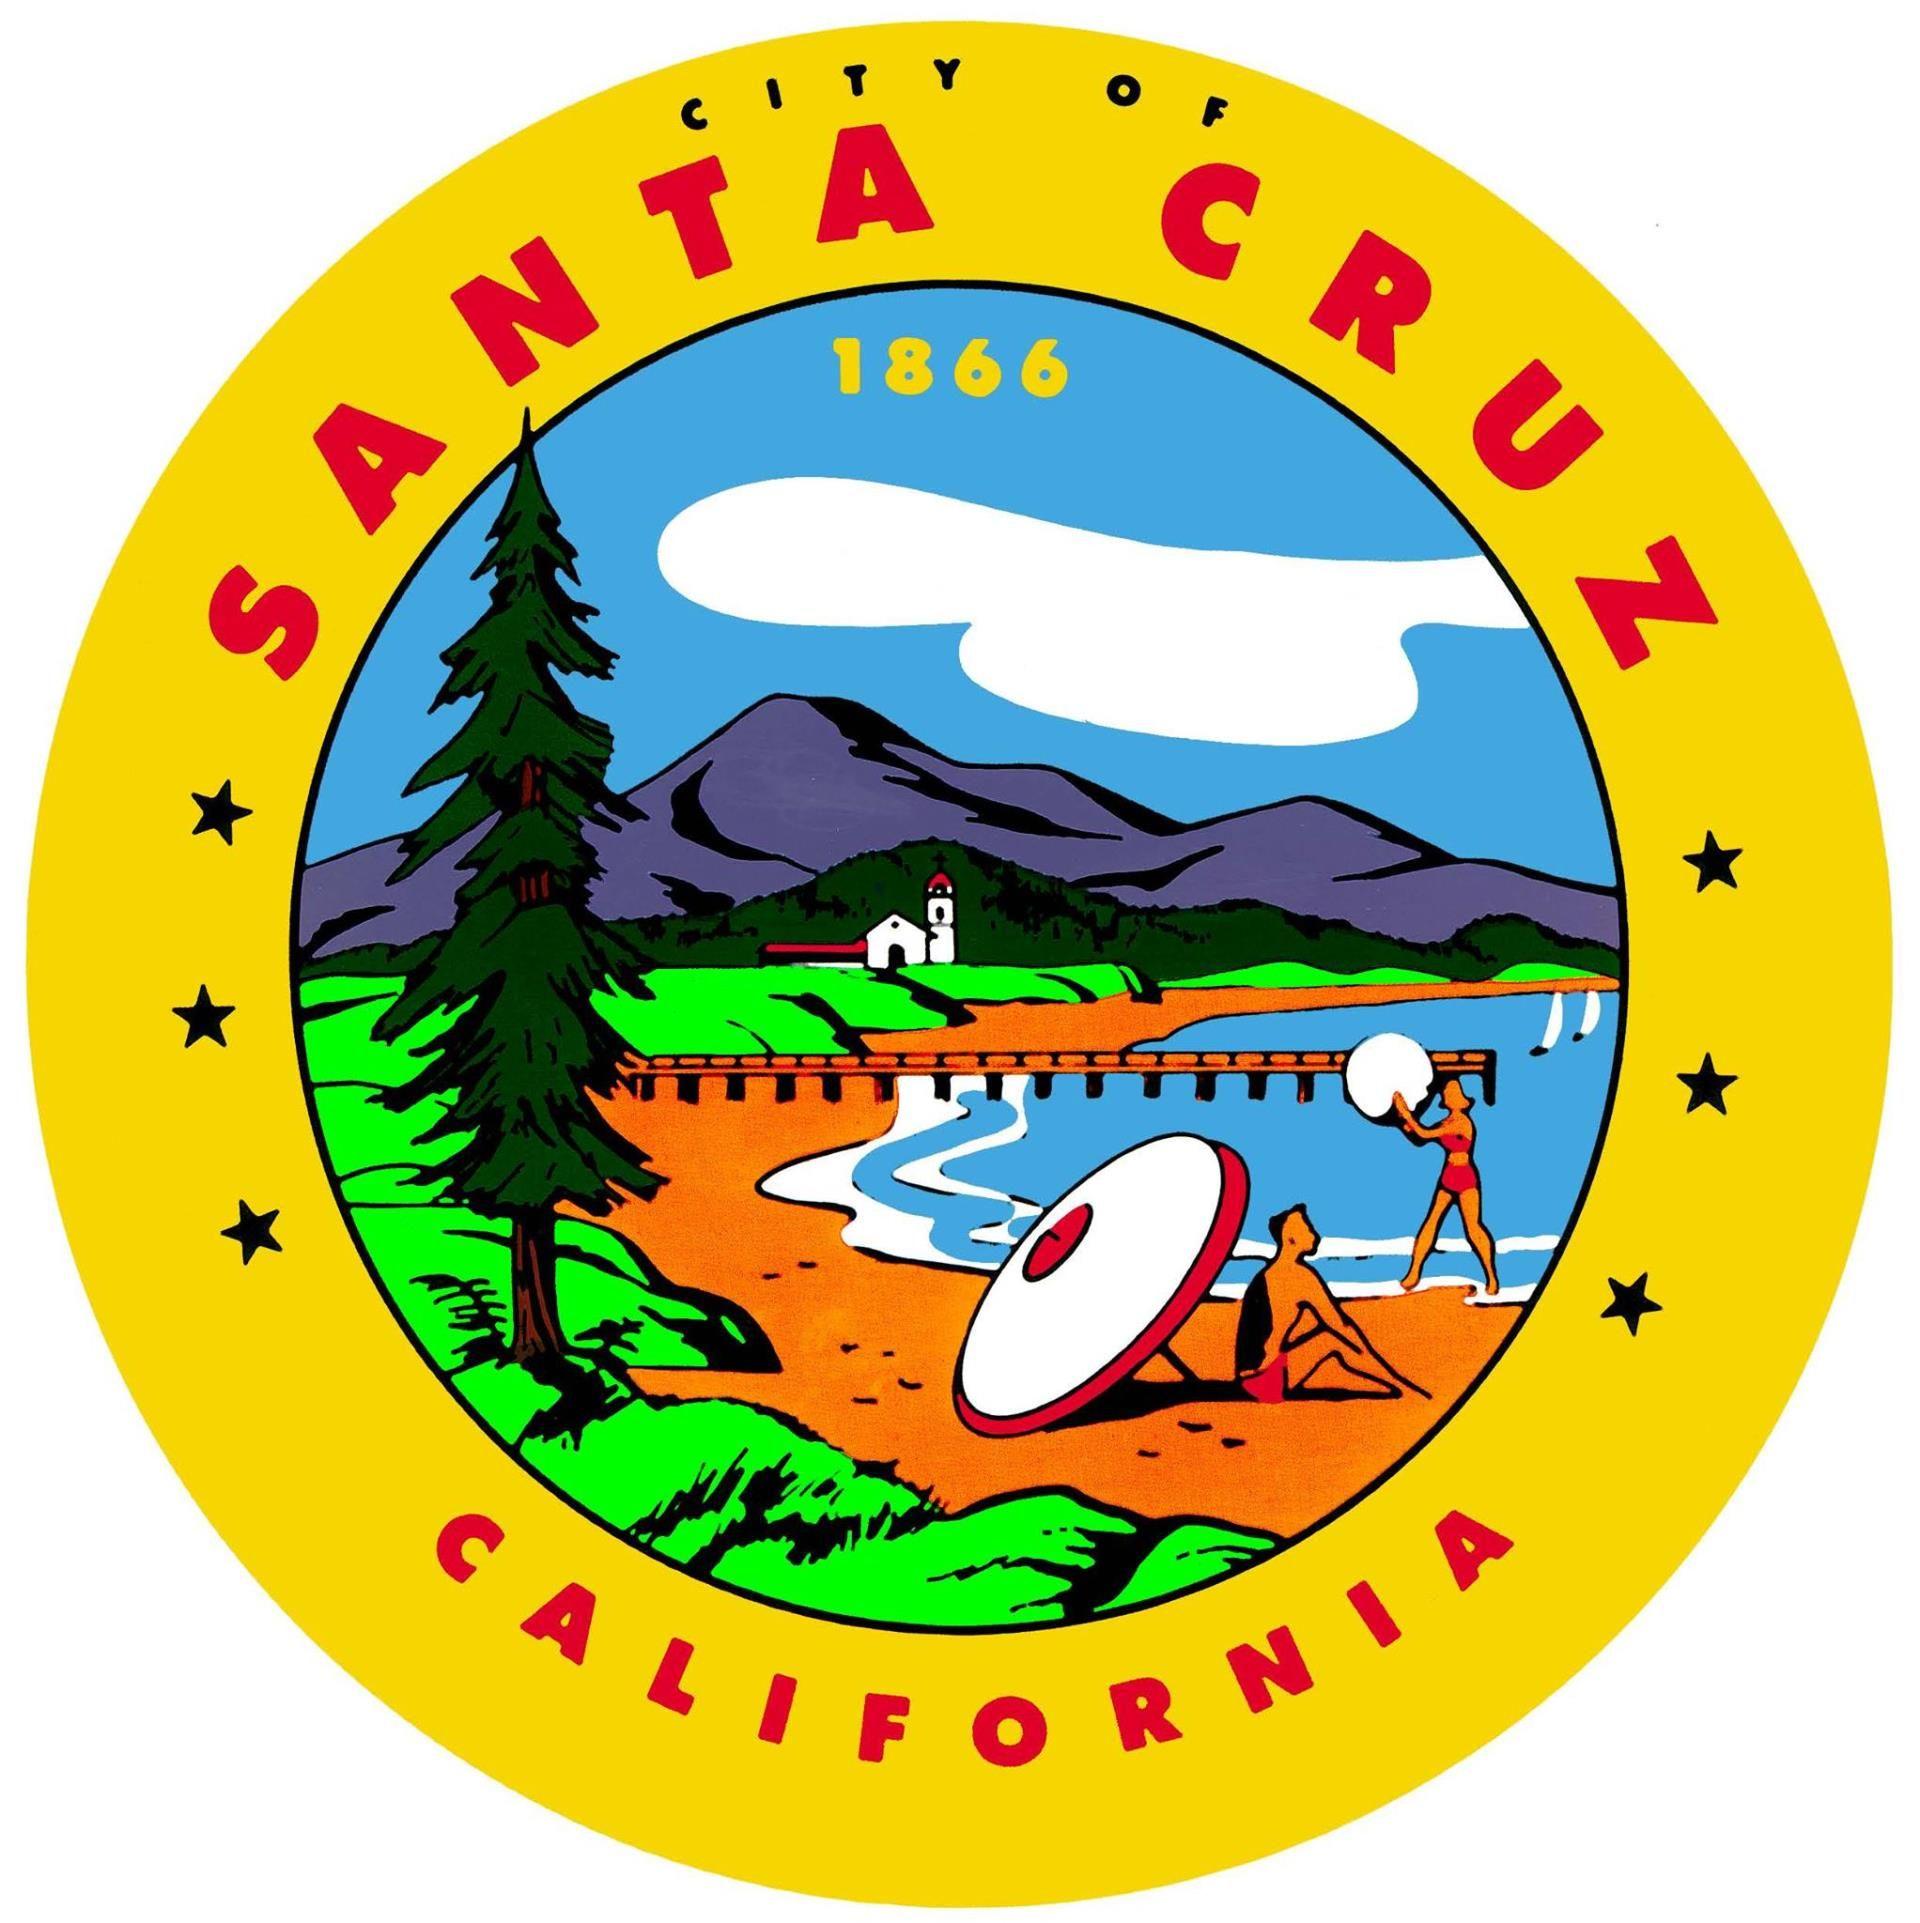 City of Santa Cruz Logo - City of Santa Cruz | Home